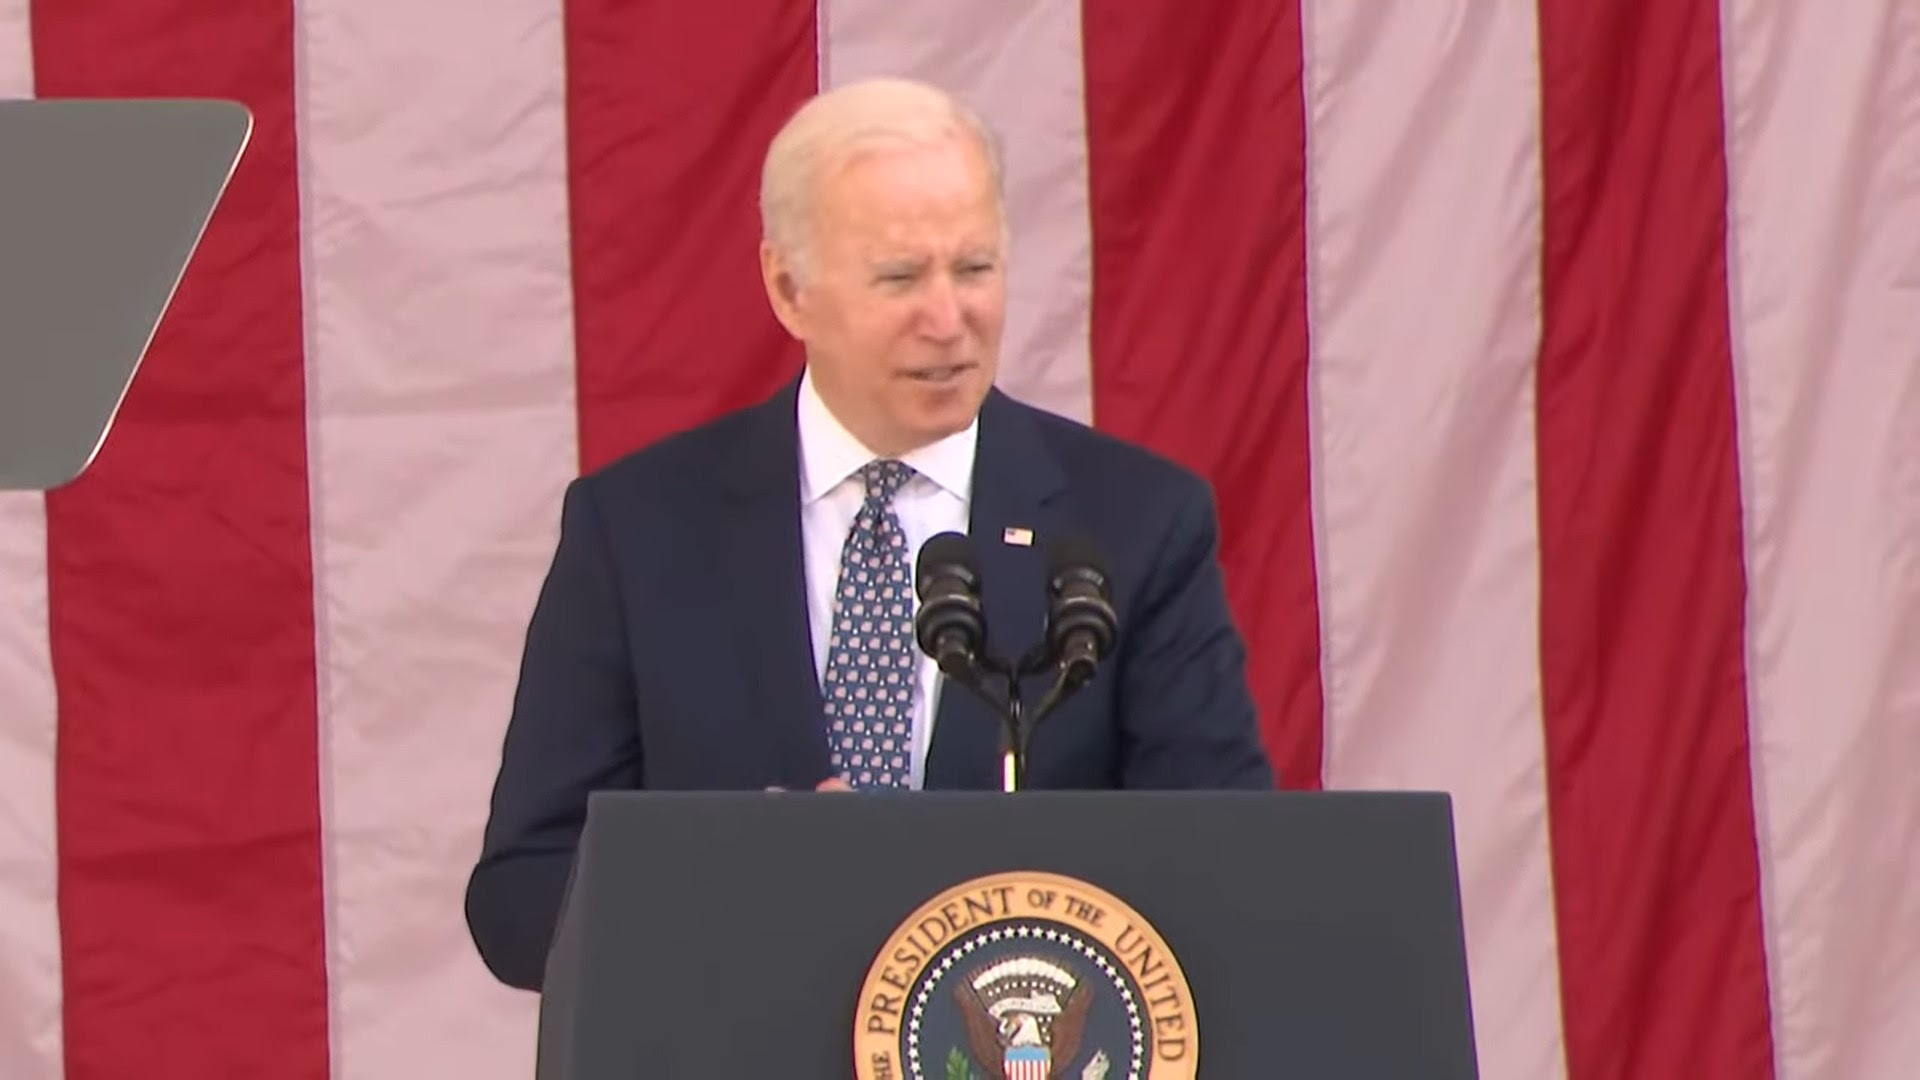 [WATCH] Biden Goes Full-Blown Racist During Live Speech at Arlington National Cemetery